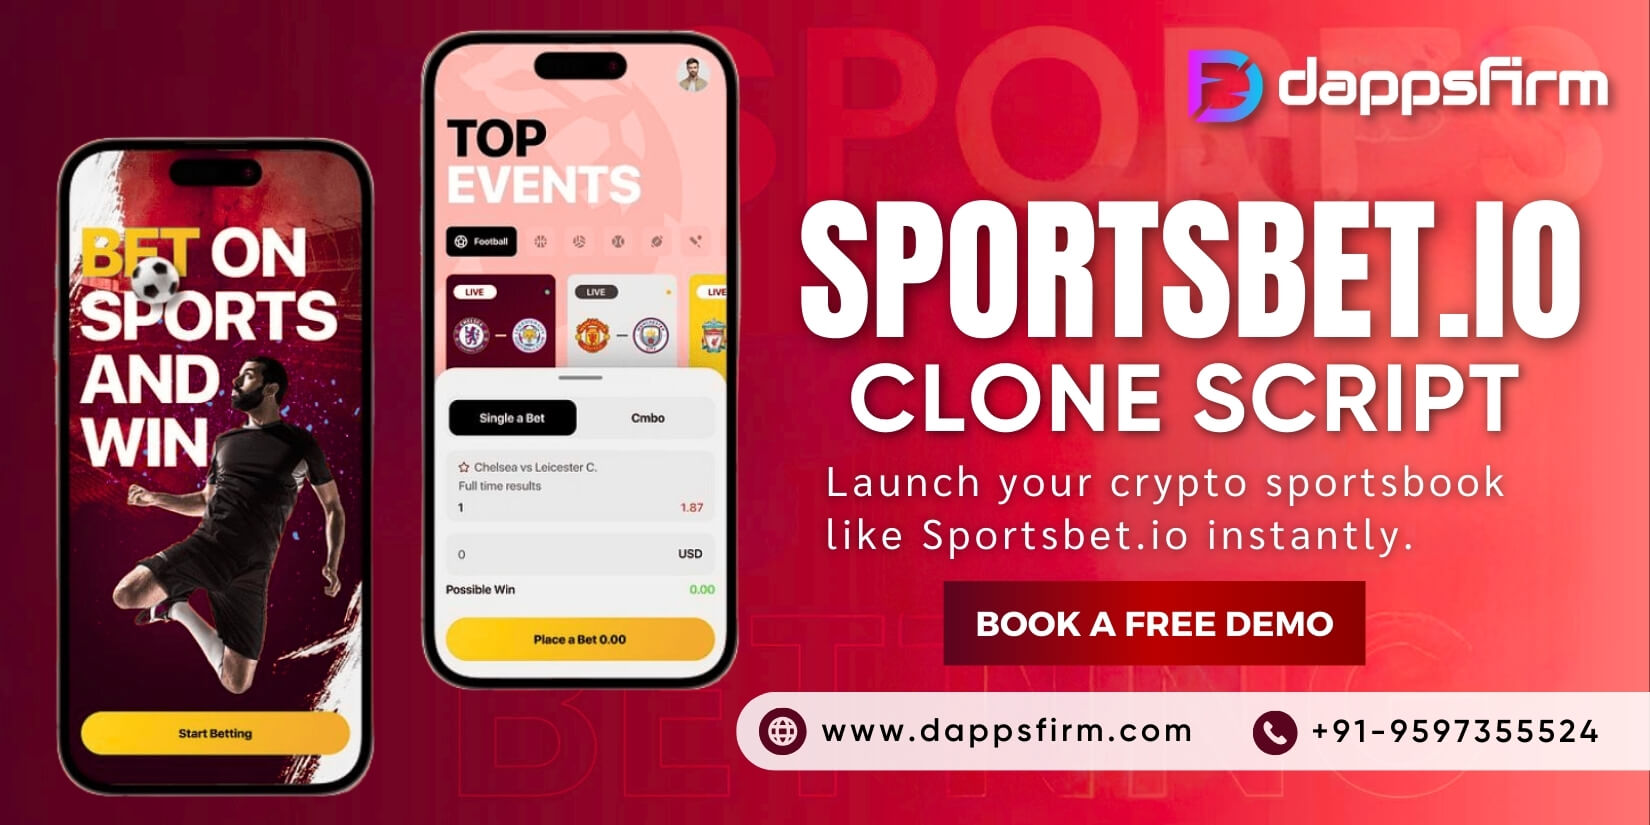 Sportsbet.io Clone Script To Build Your Sports Betting Platform